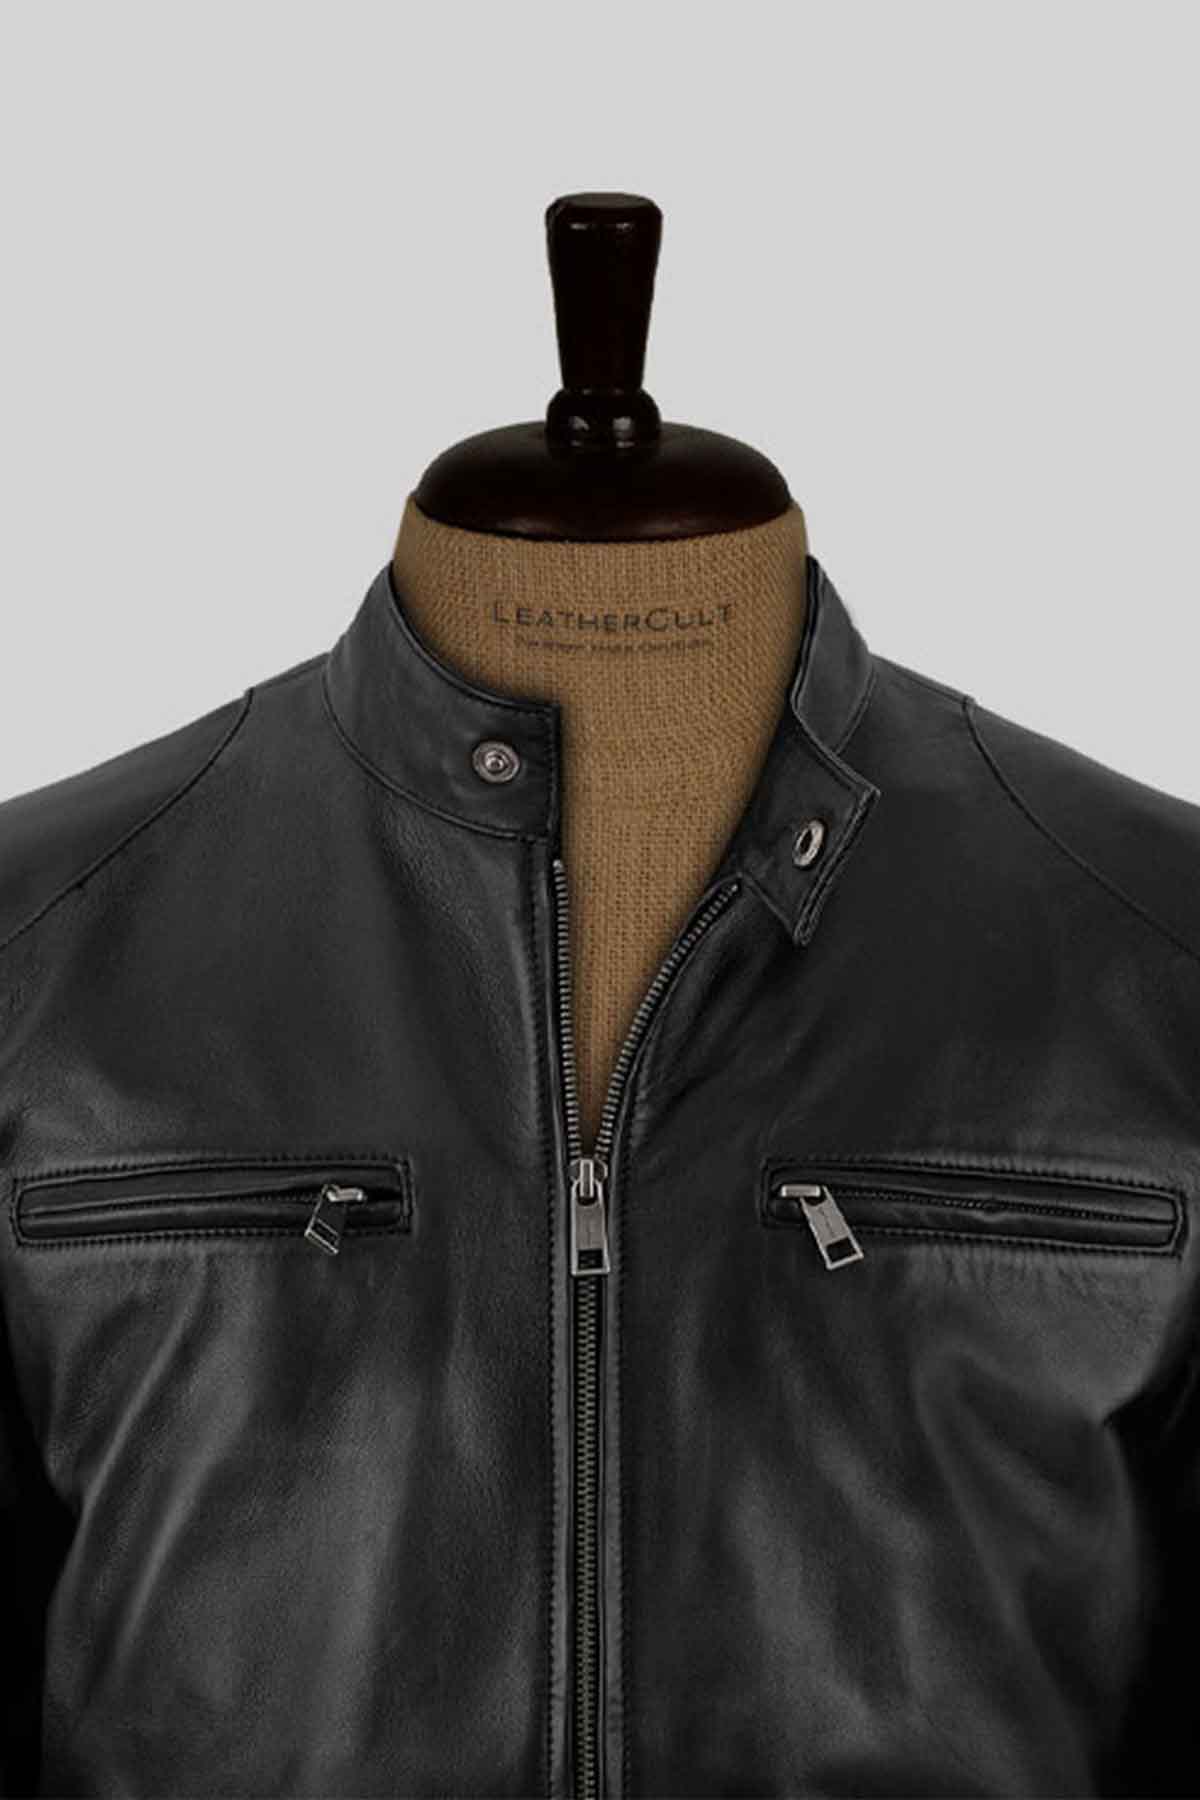 Captain America Leather Jacket Endgame